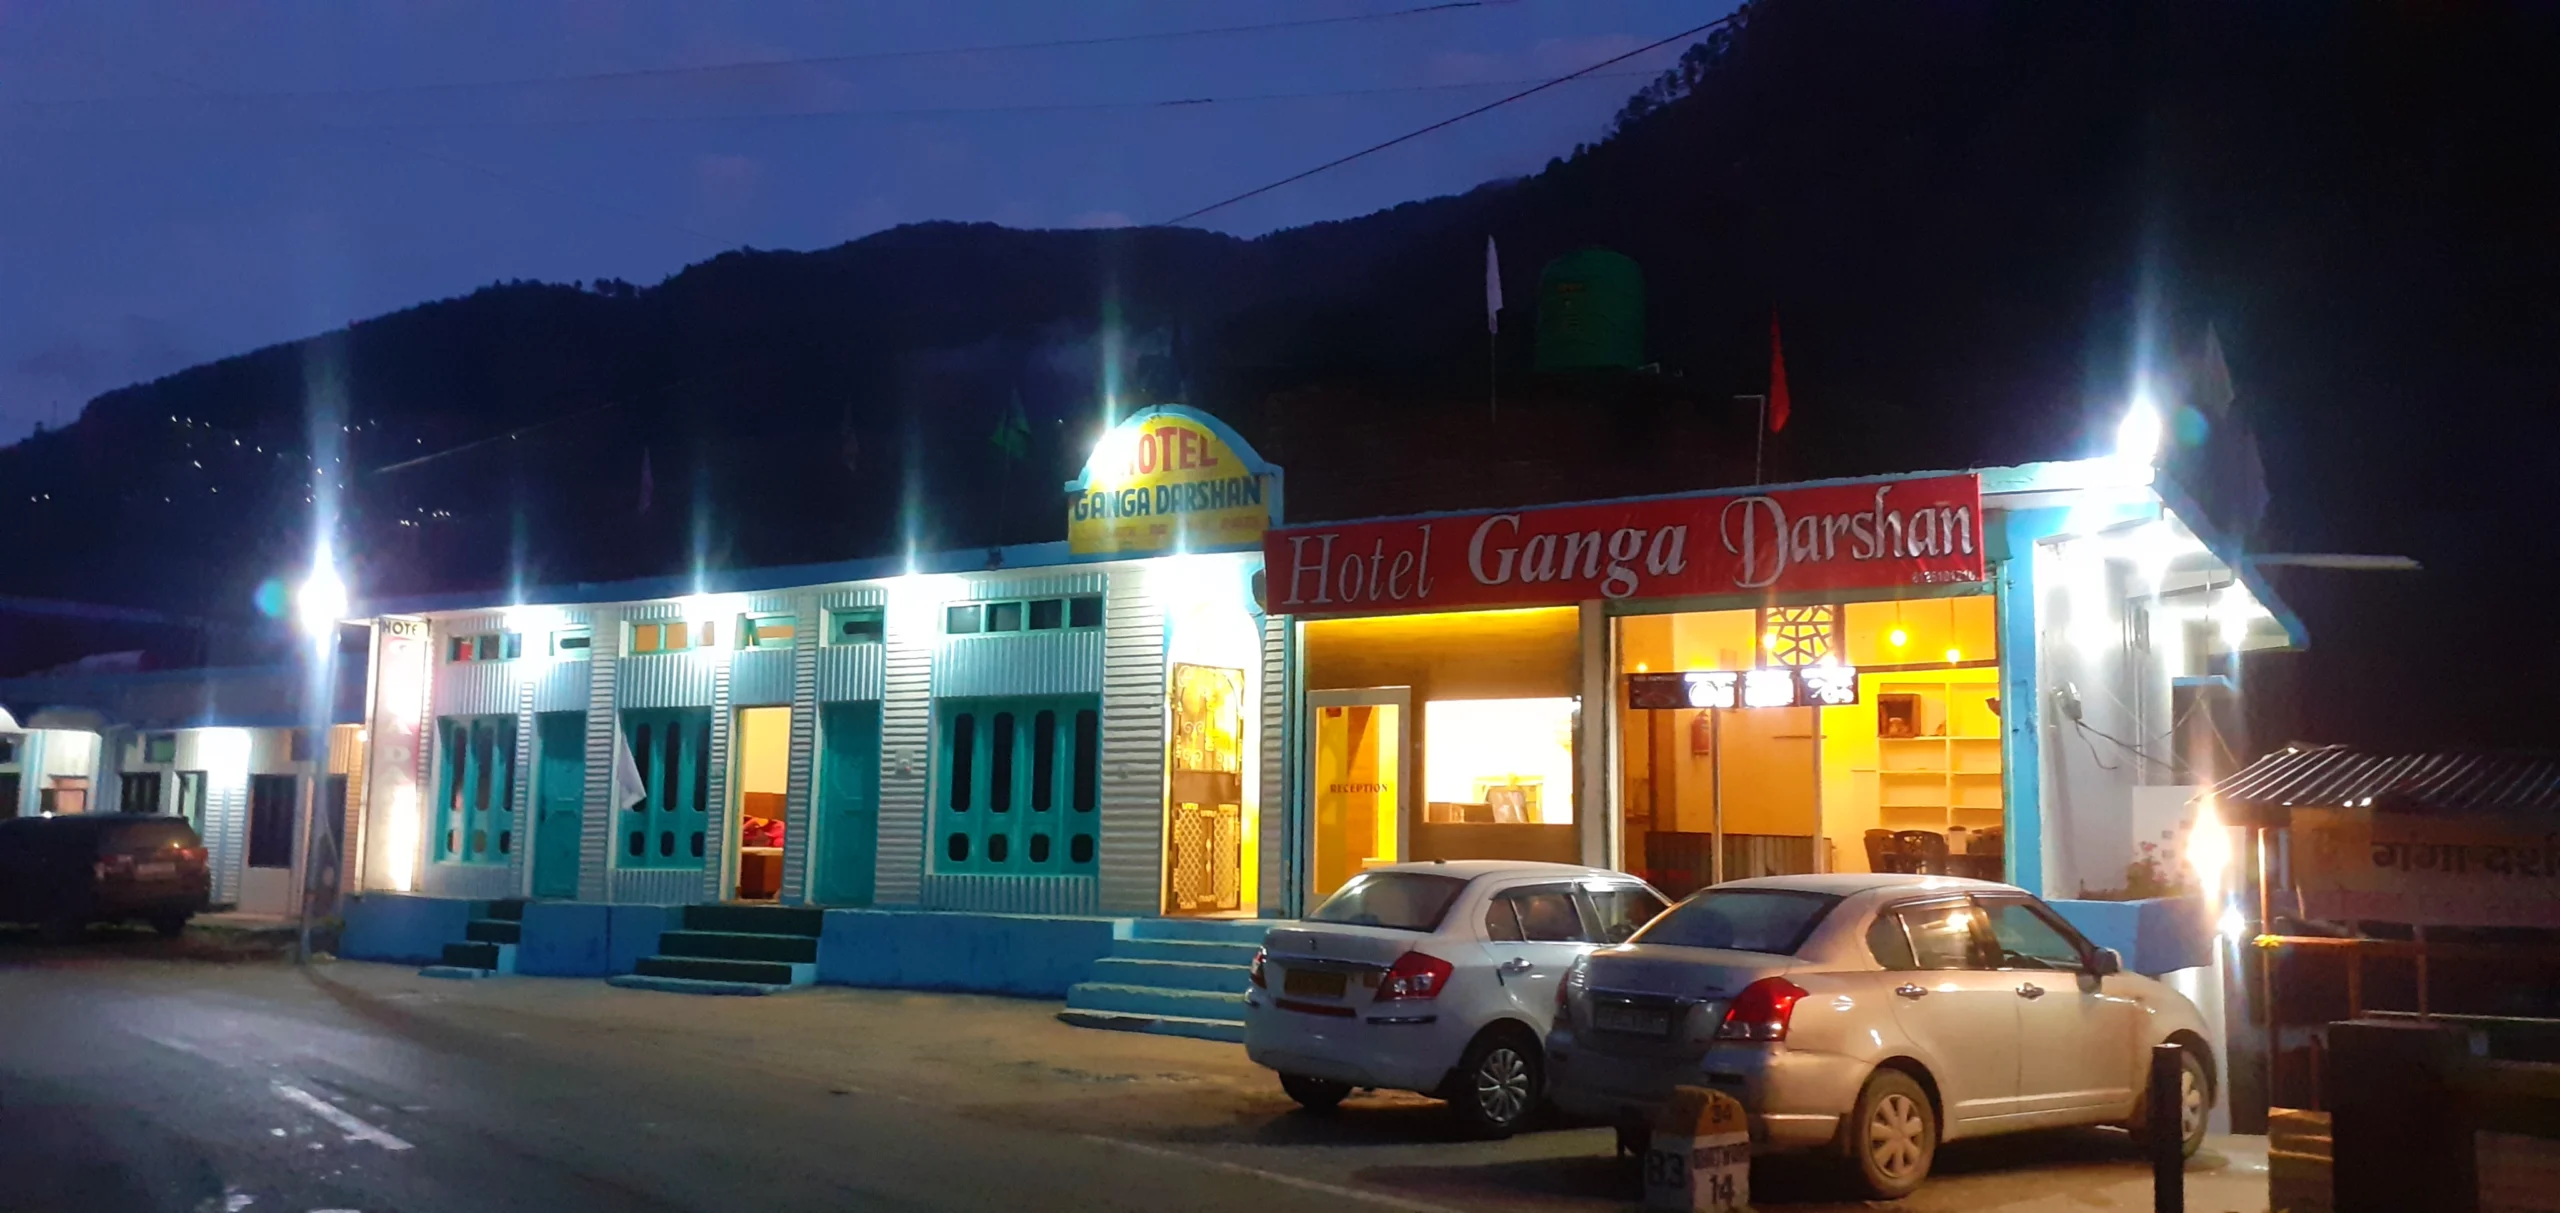 Exterior of Hotel Ganga Darshan, the Best Hotel in Gangotri & Uttarkashi, Uttarakhand